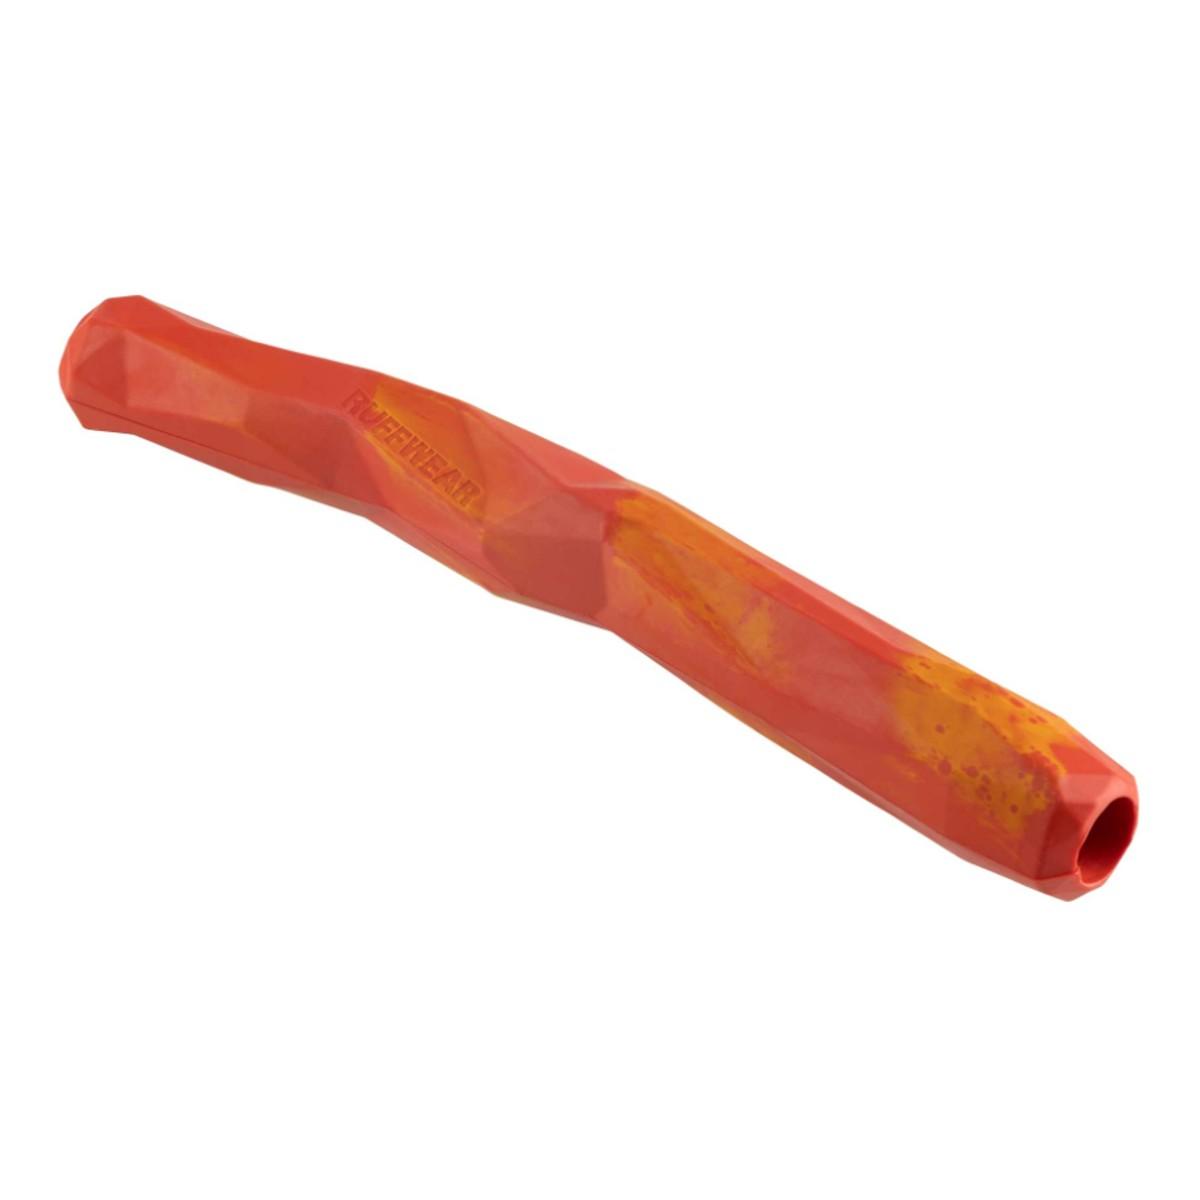 Ruffwear Gnawt-a-Stick Rubber Dog Toy - Red Sumac